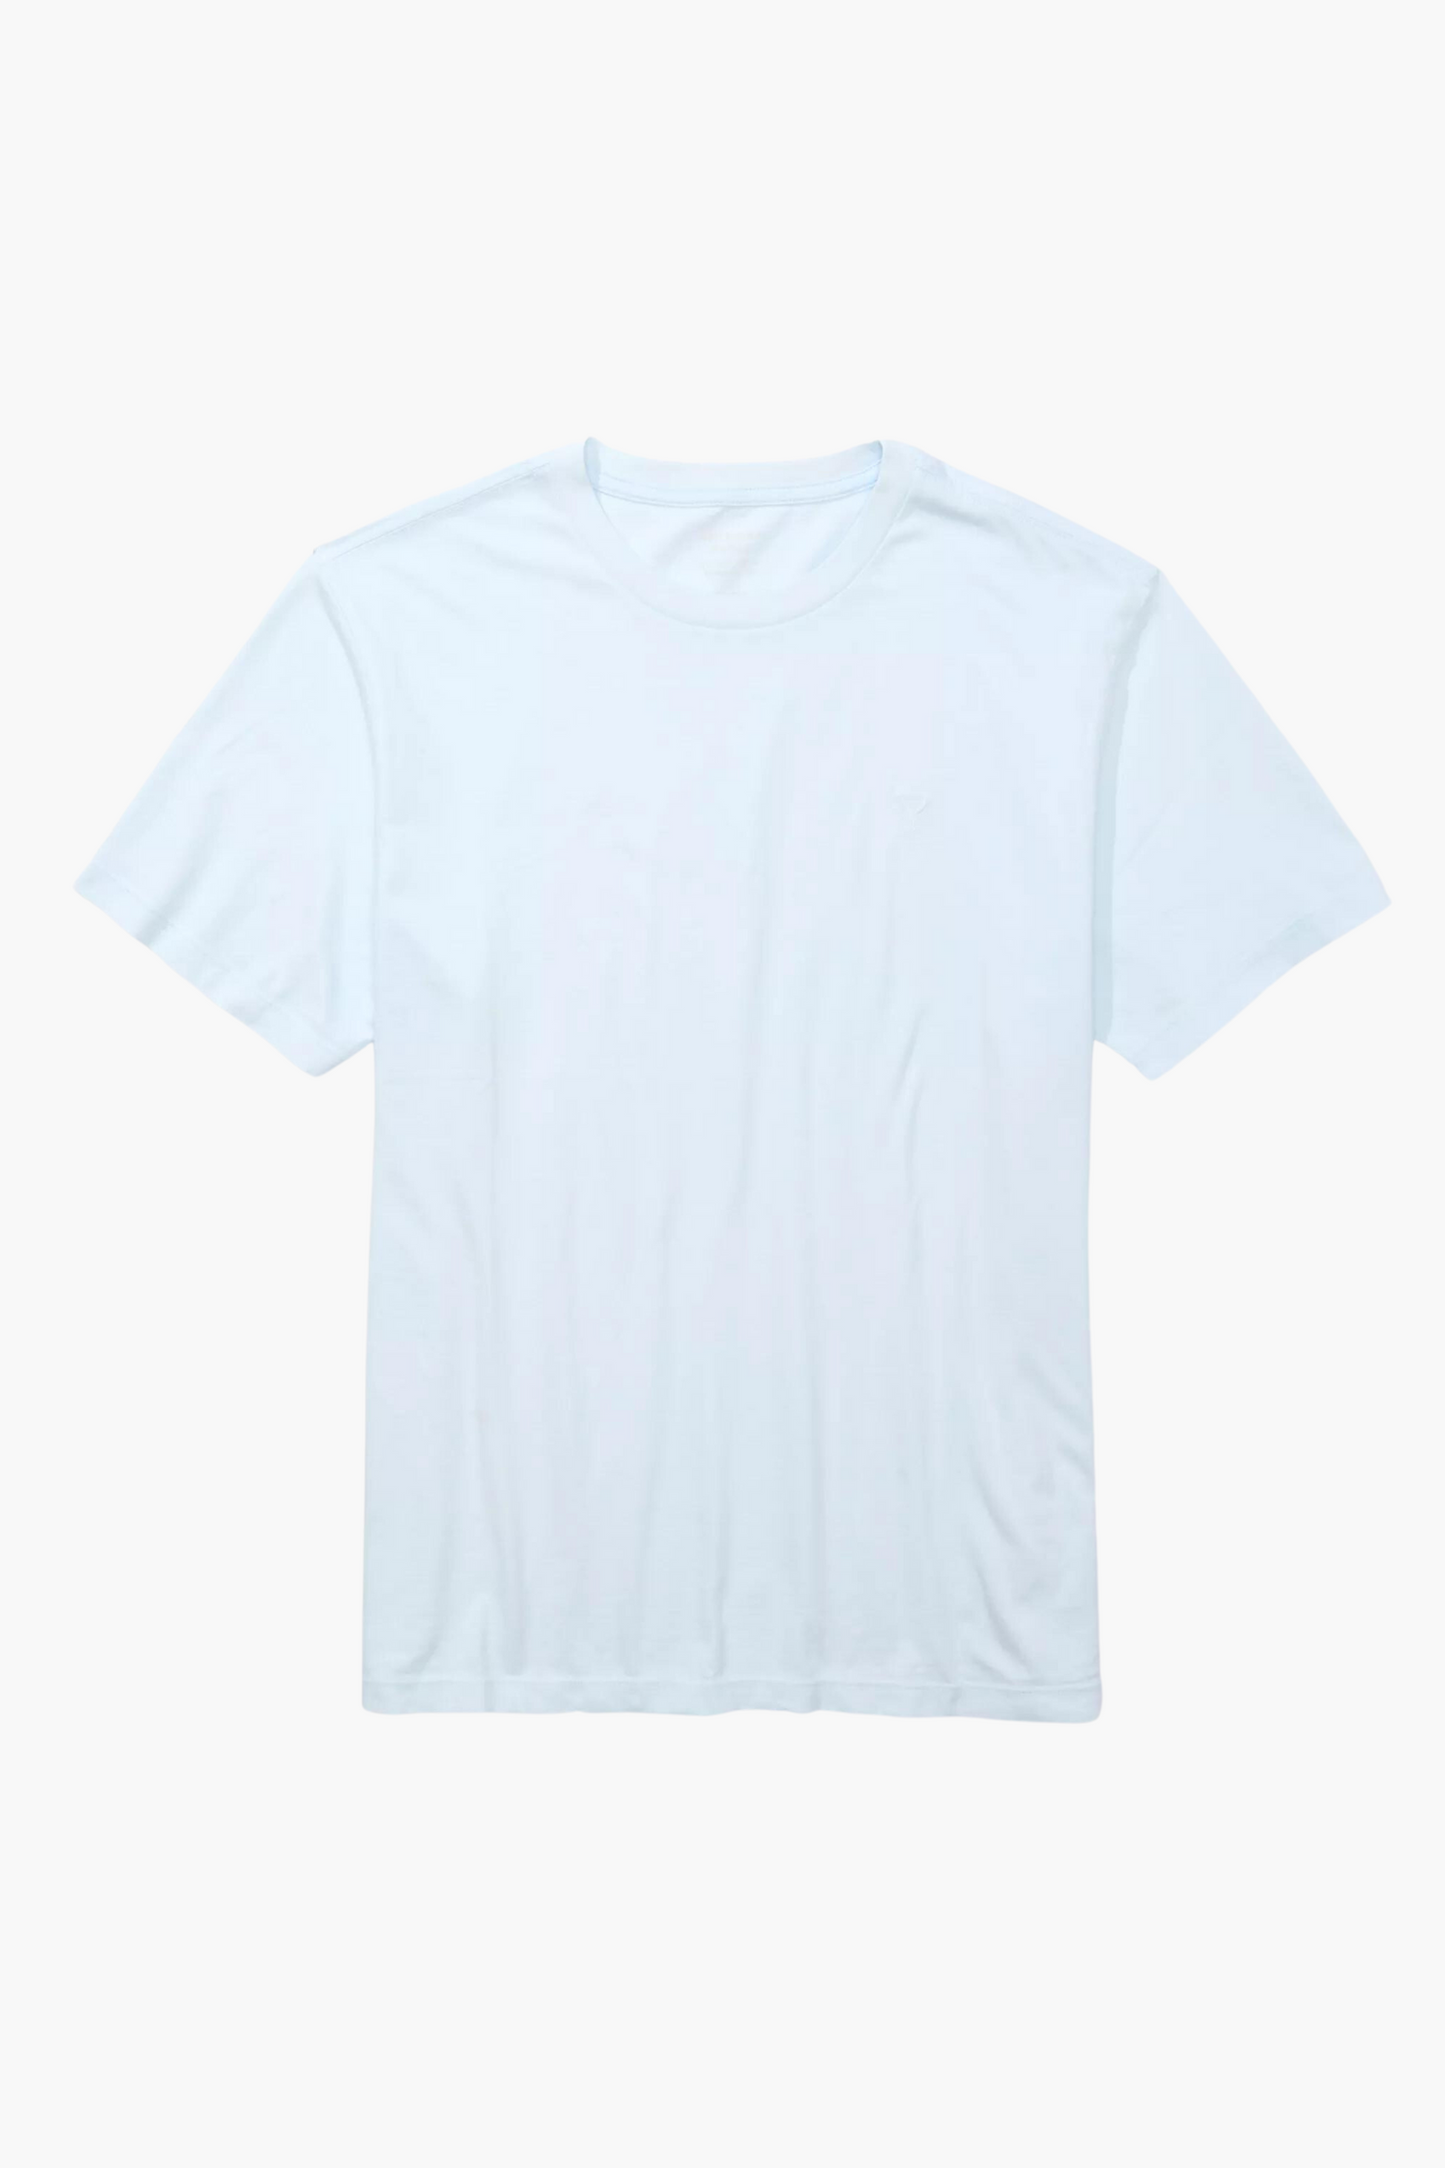 American Eagle Plain T-Shirt